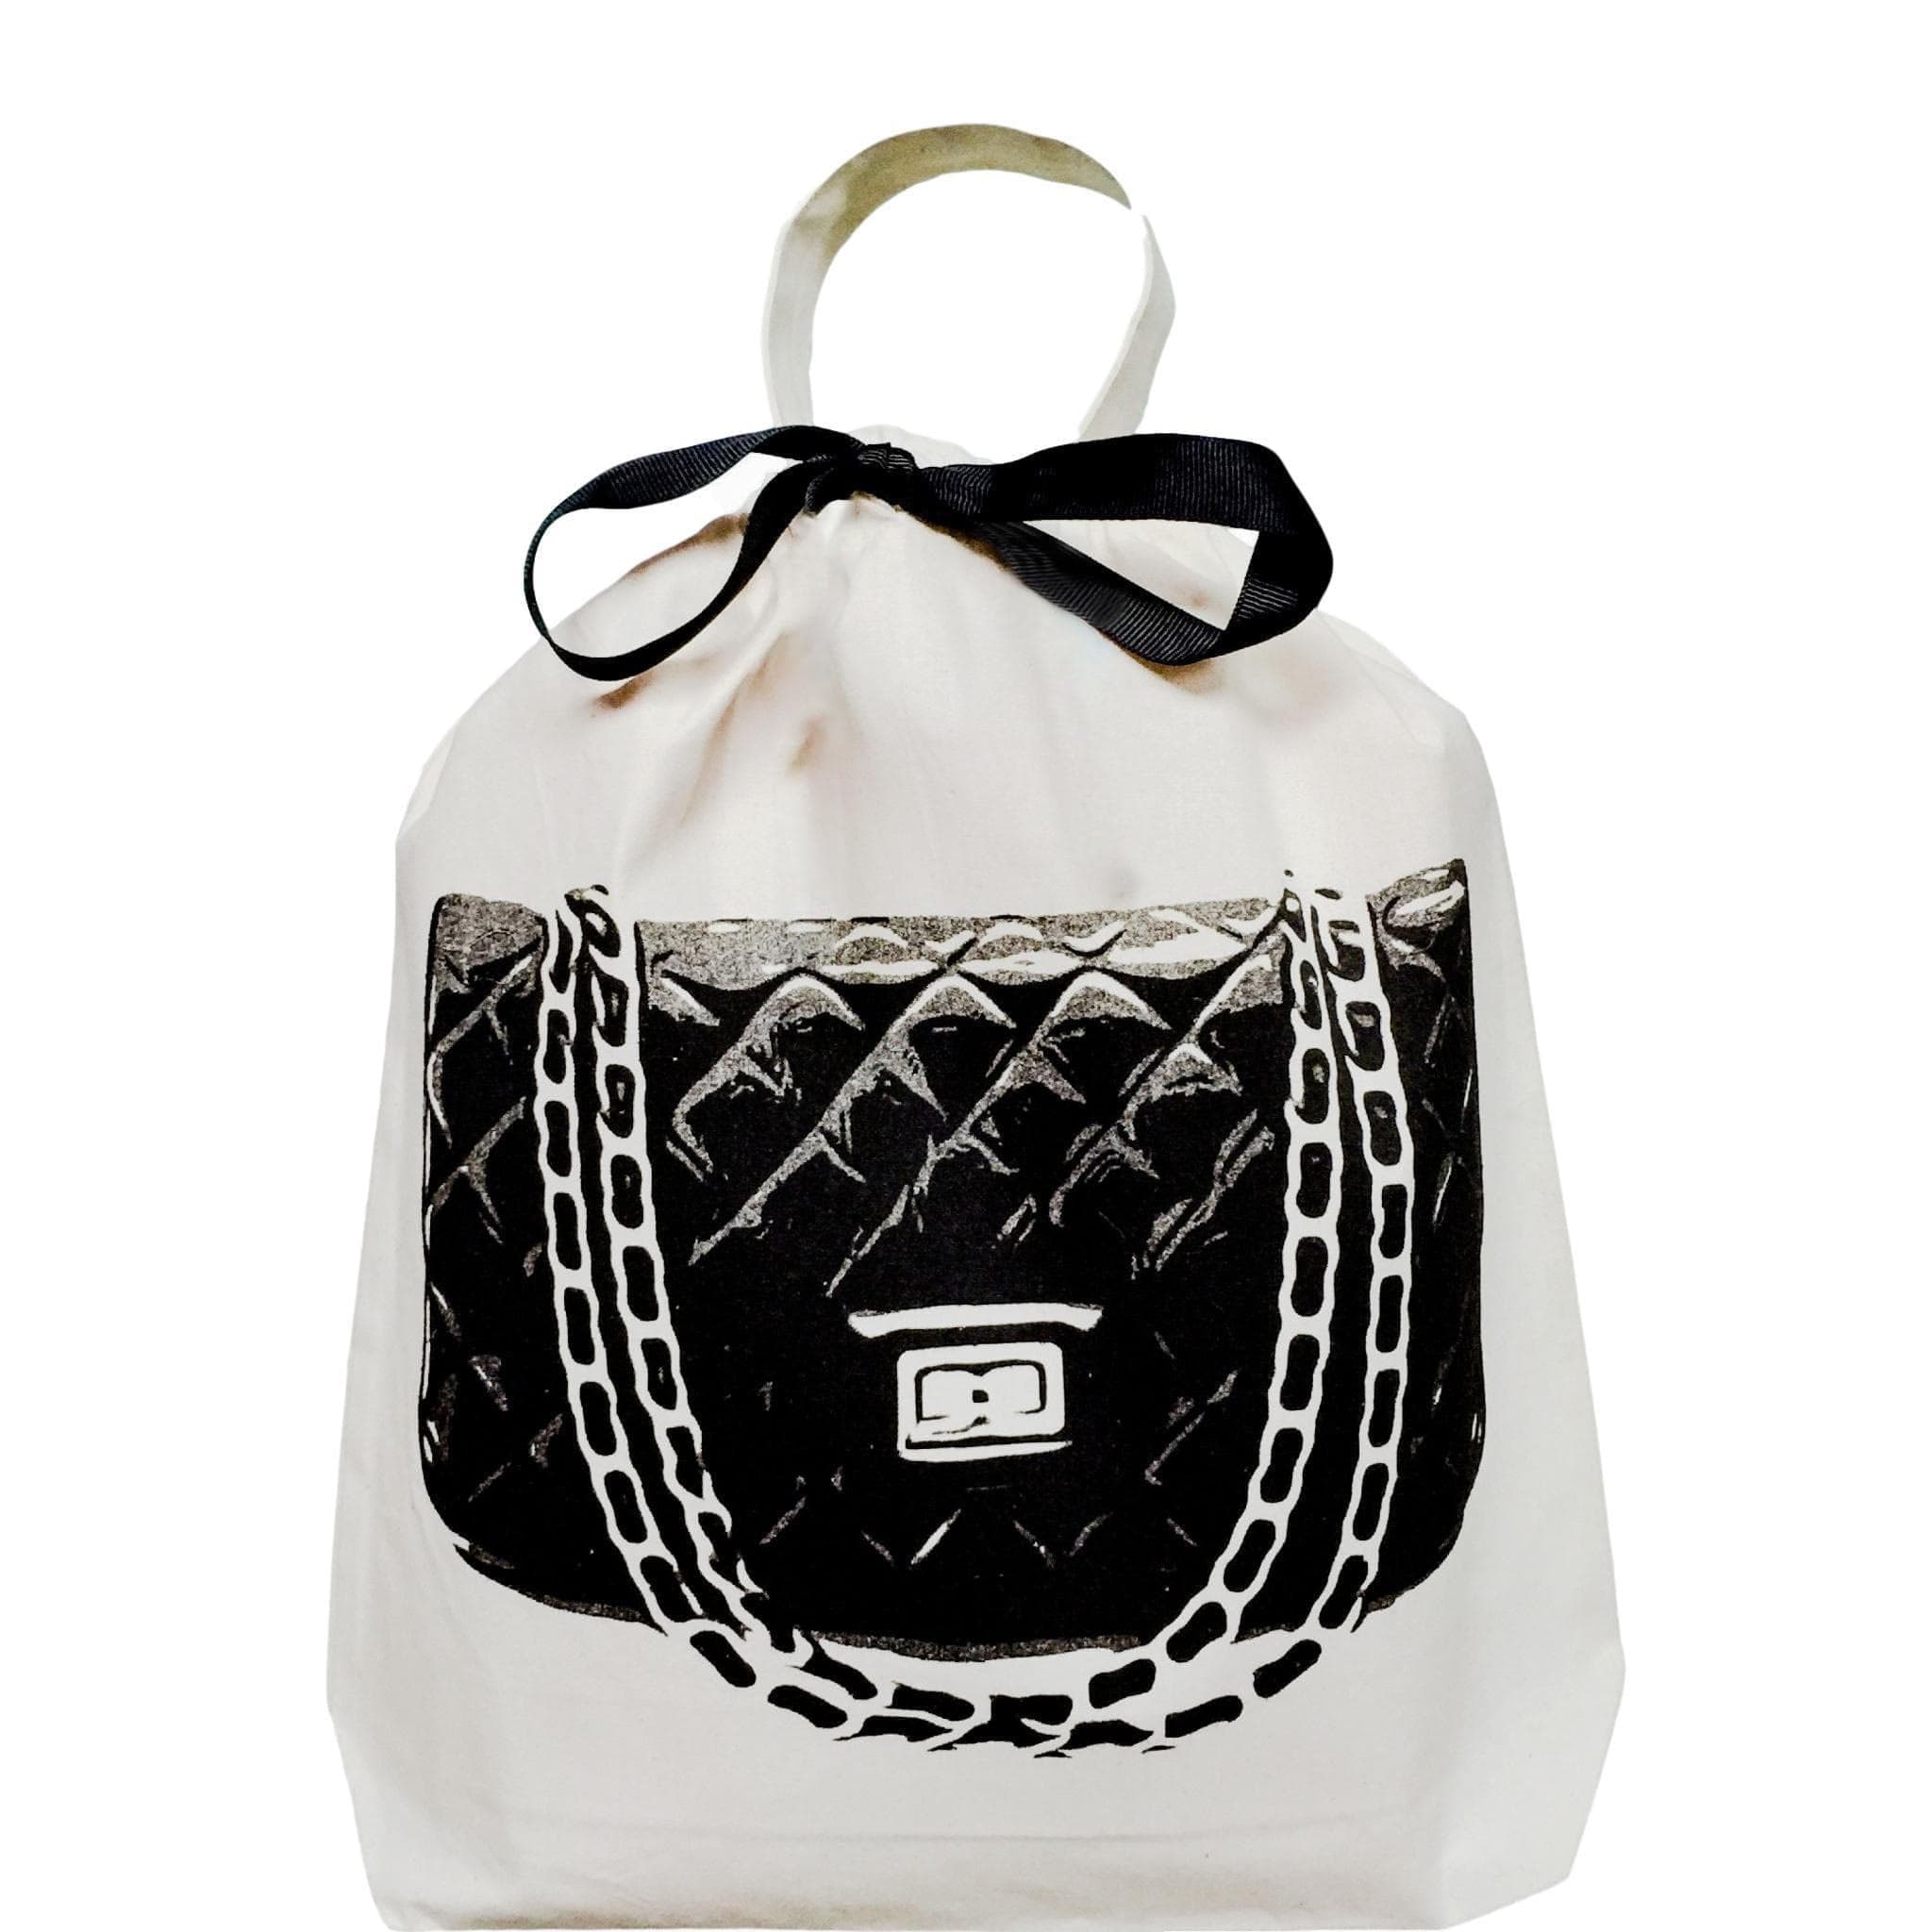 Louis Vuitton Dust Bags Cover Storage Purse Handbag for Sale in